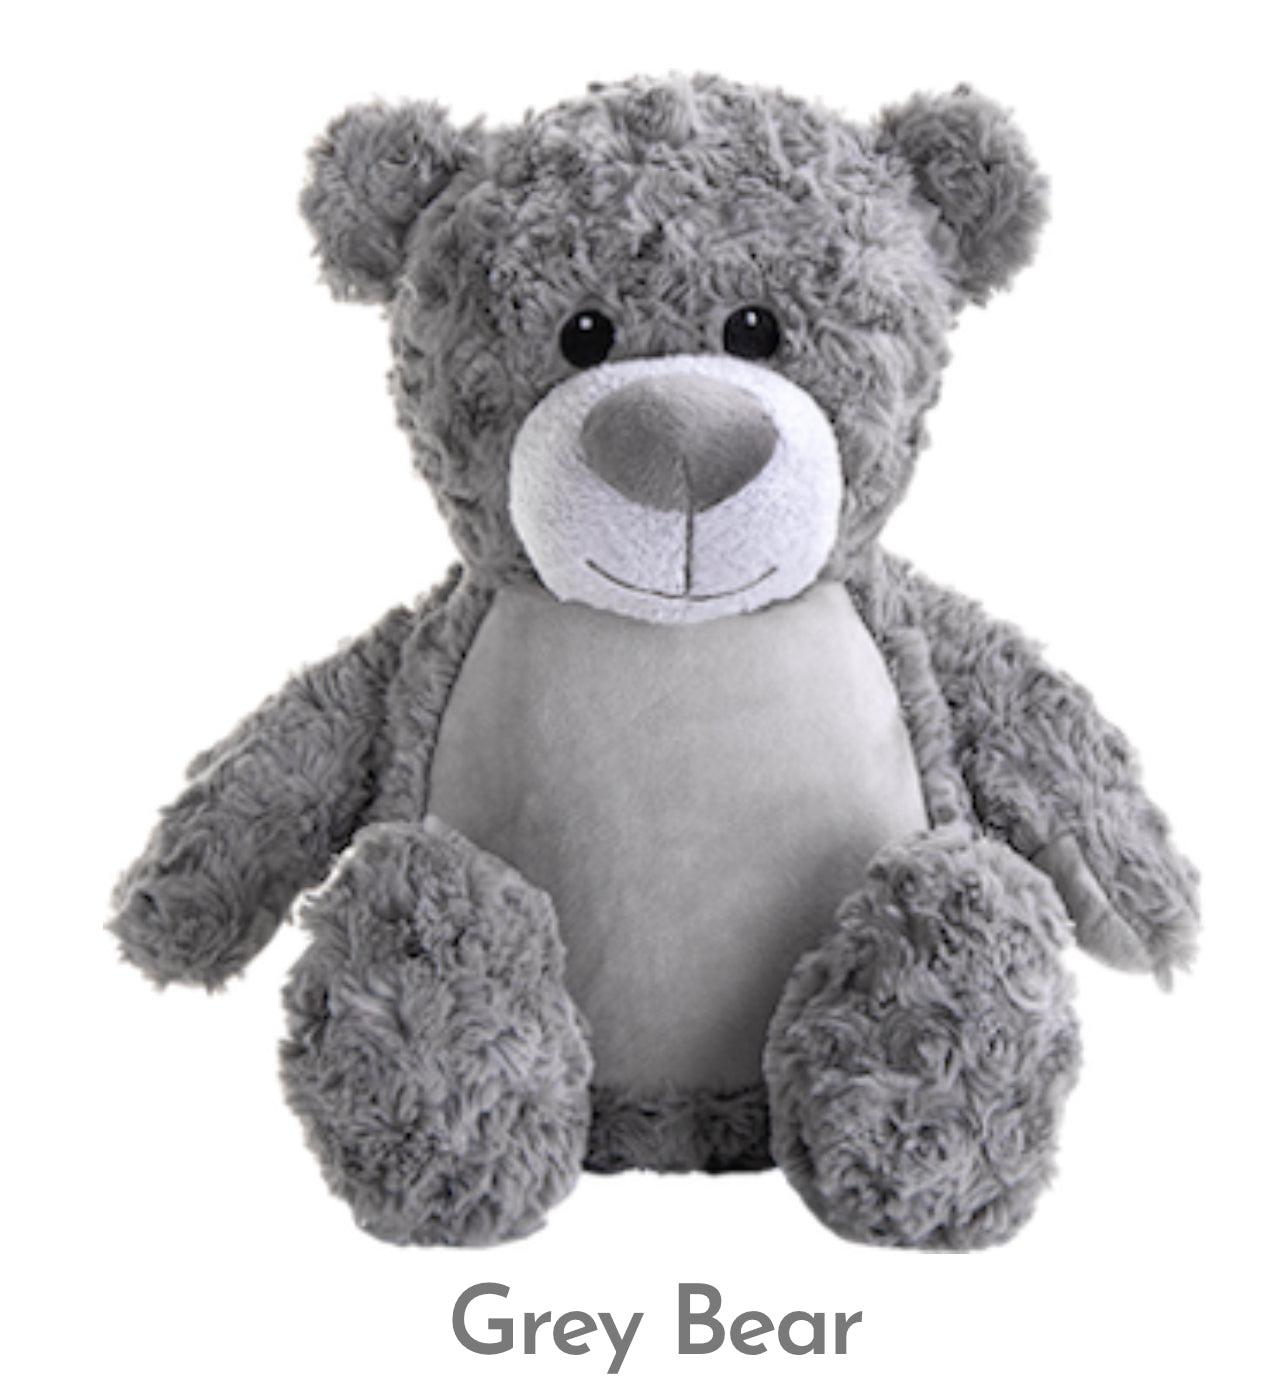 PERSONALISED MEMORY BEARS - GREY BEAR